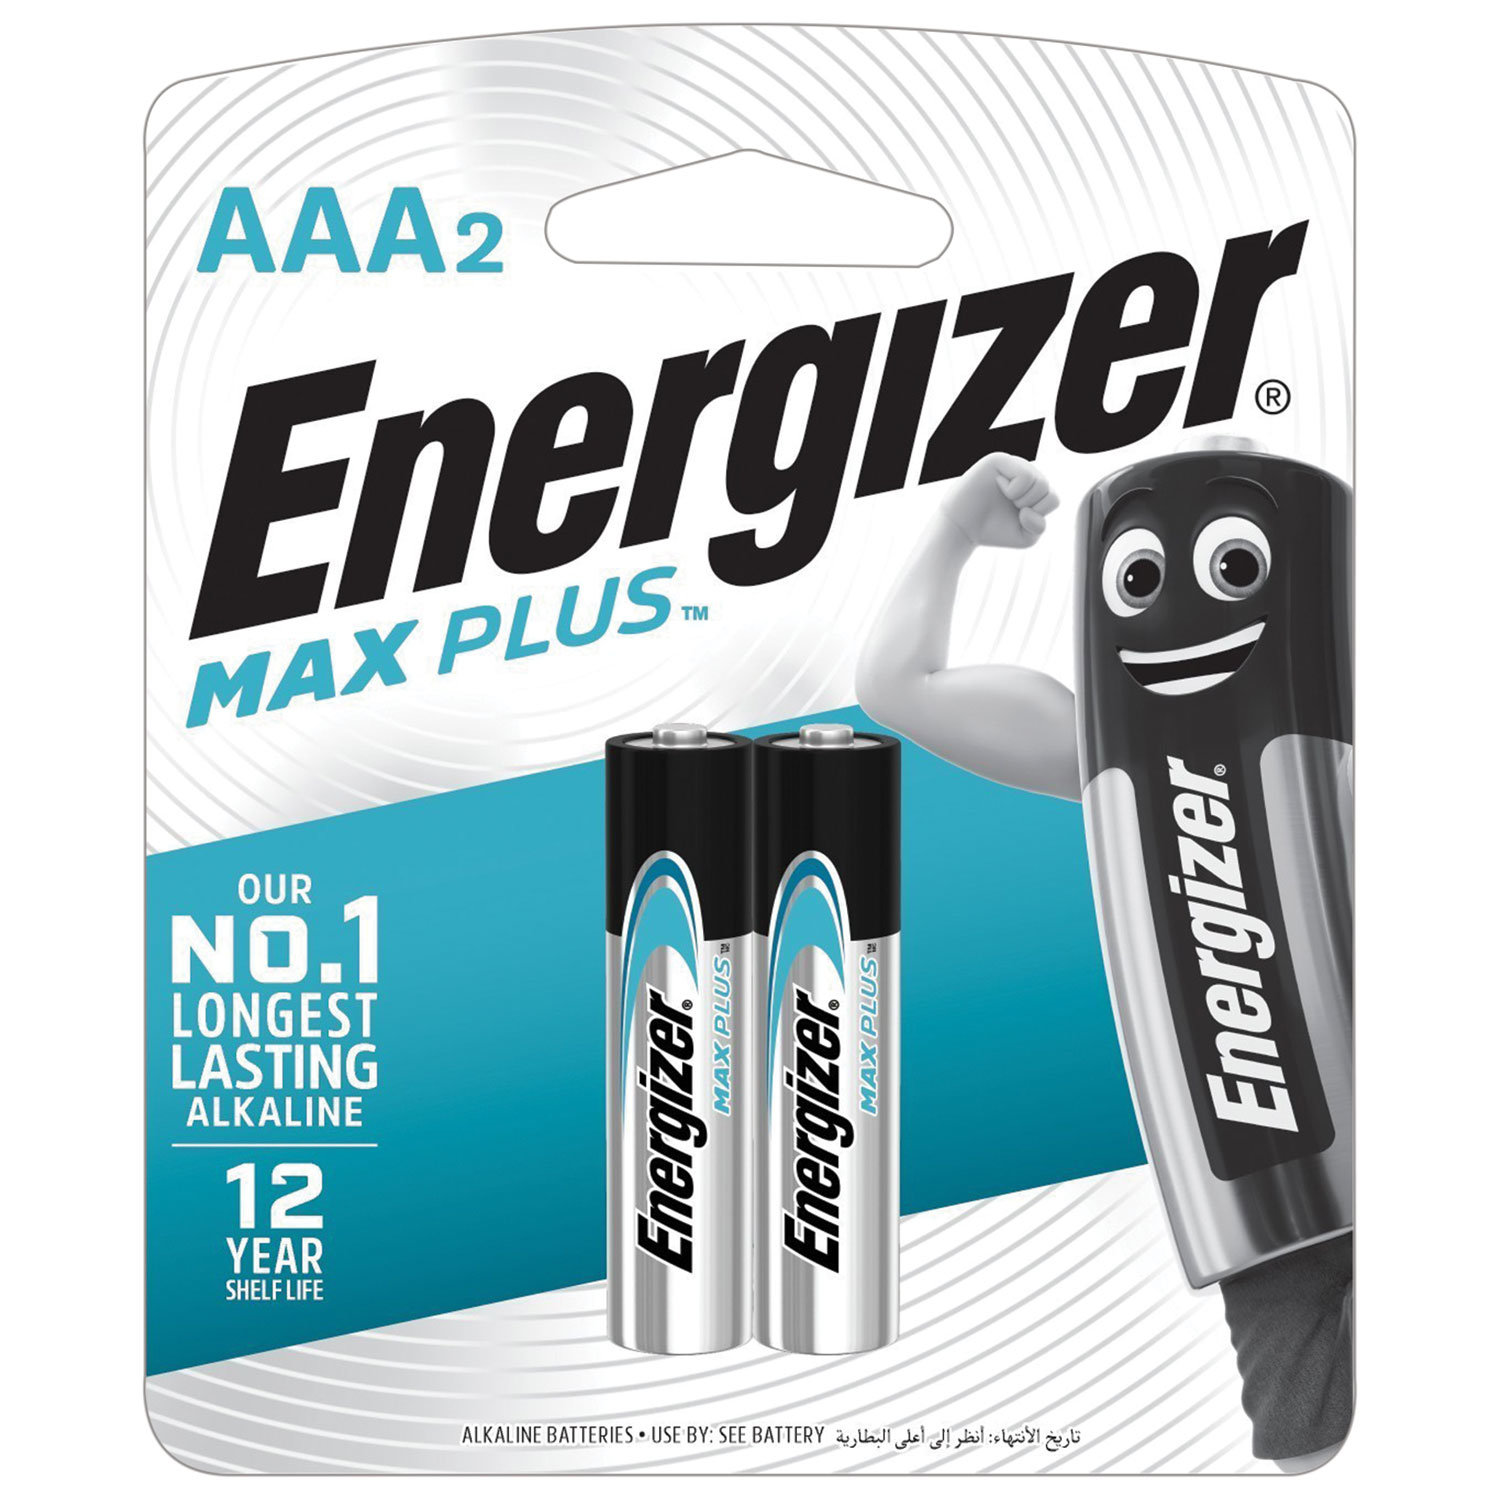 

Energizer 2 шт, Max Plus, AAA LR03, 24А, алкалиновые, мизинчиковые, блистер